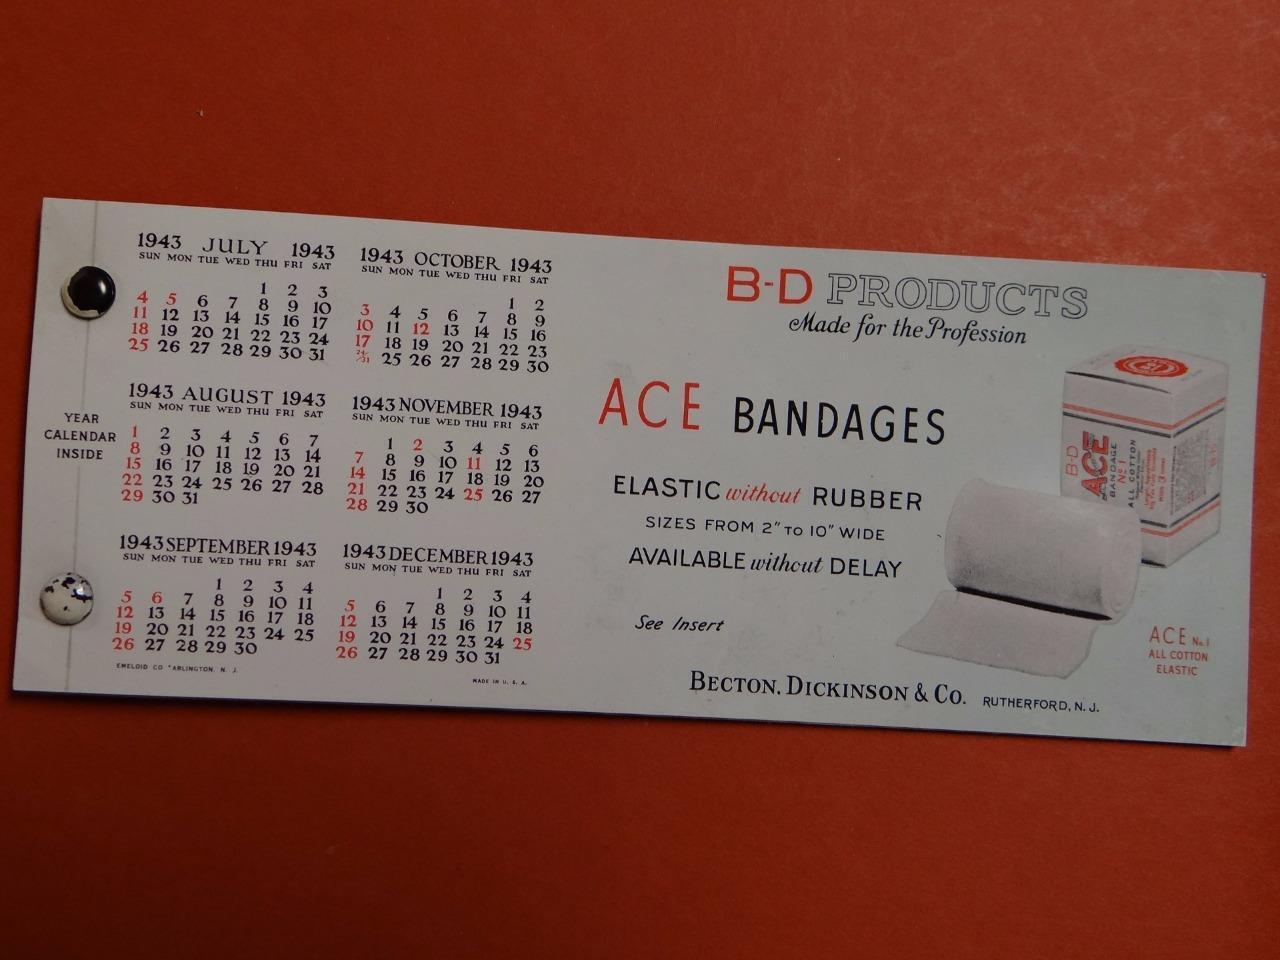 B-D Products Ace Bandages 1943 Celluloid Callendar Blotter cover